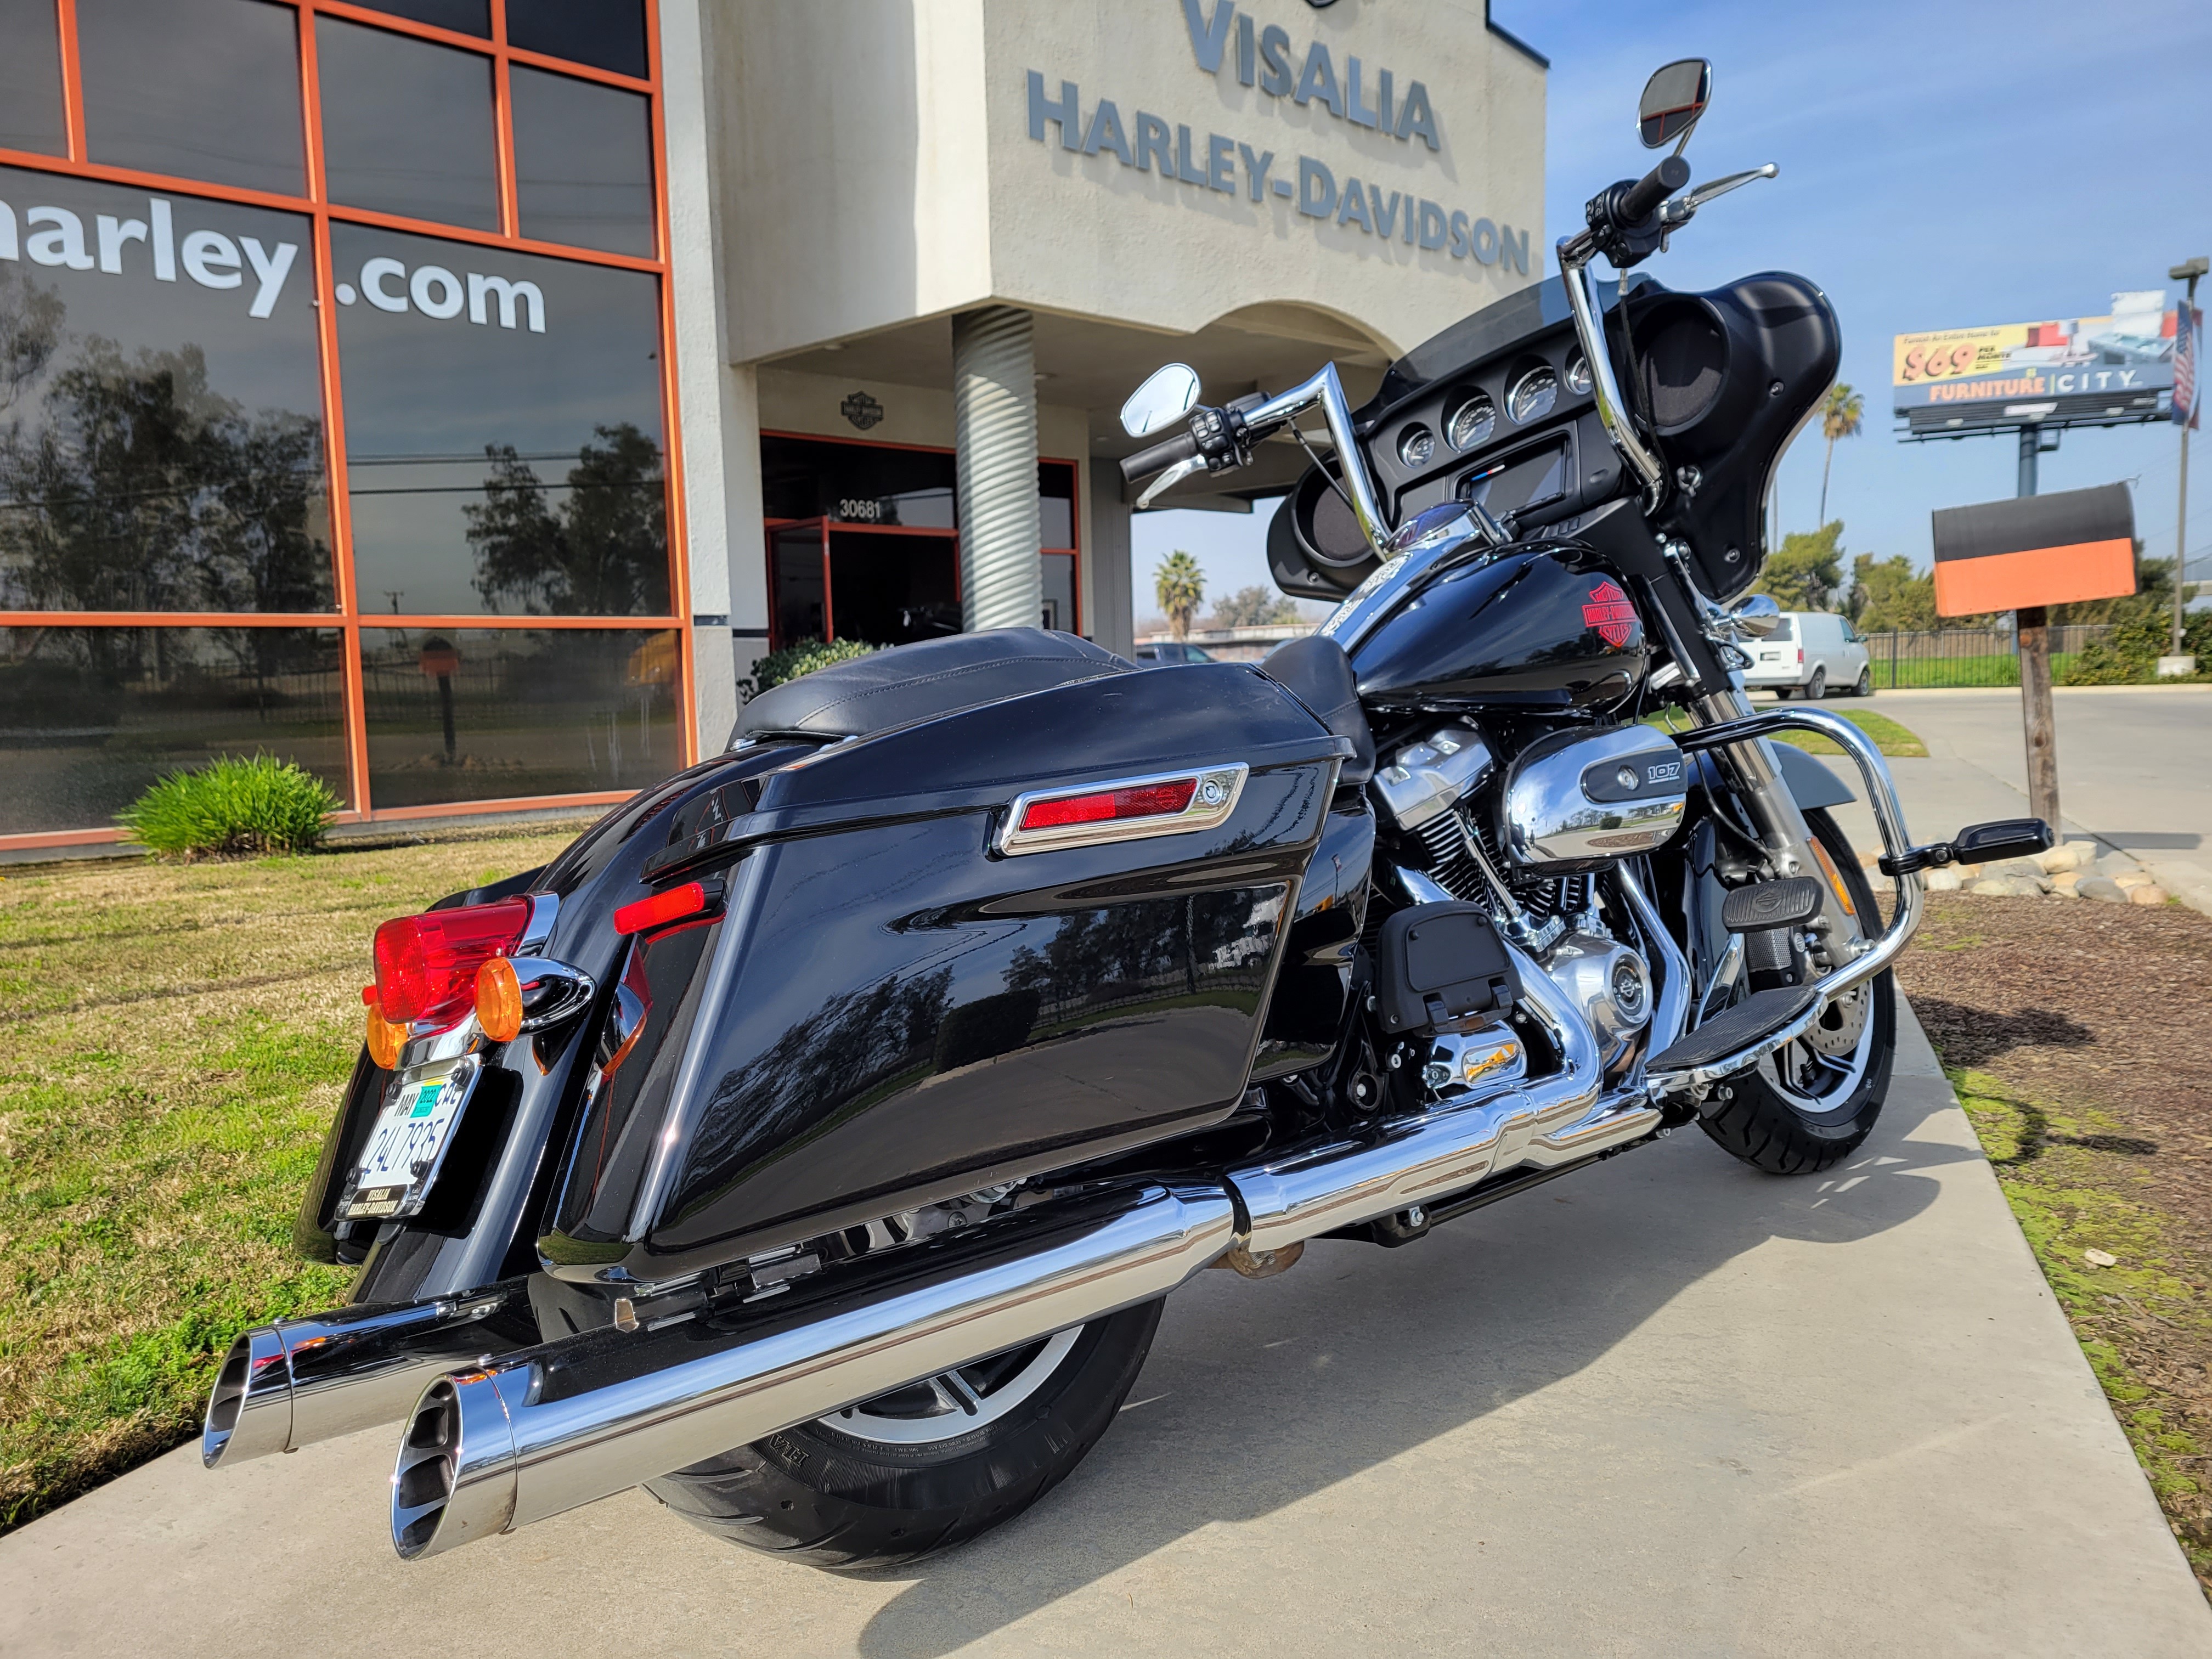 2019 Harley-Davidson Electra Glide Standard at Visalia Harley-Davidson